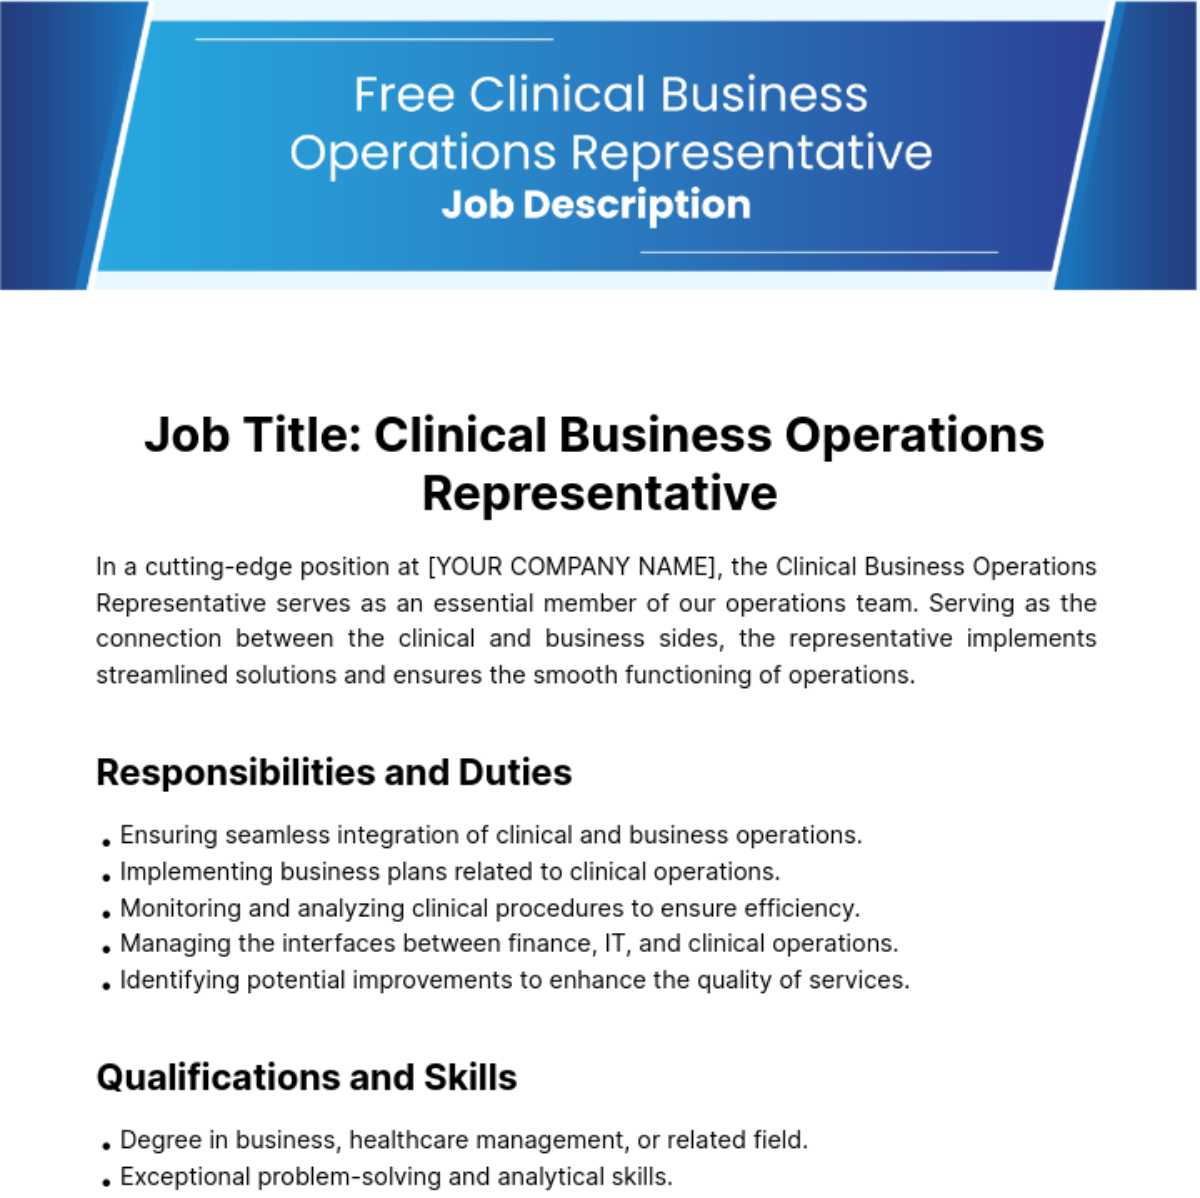 Free Clinical Business Operations Representative Job Description Template